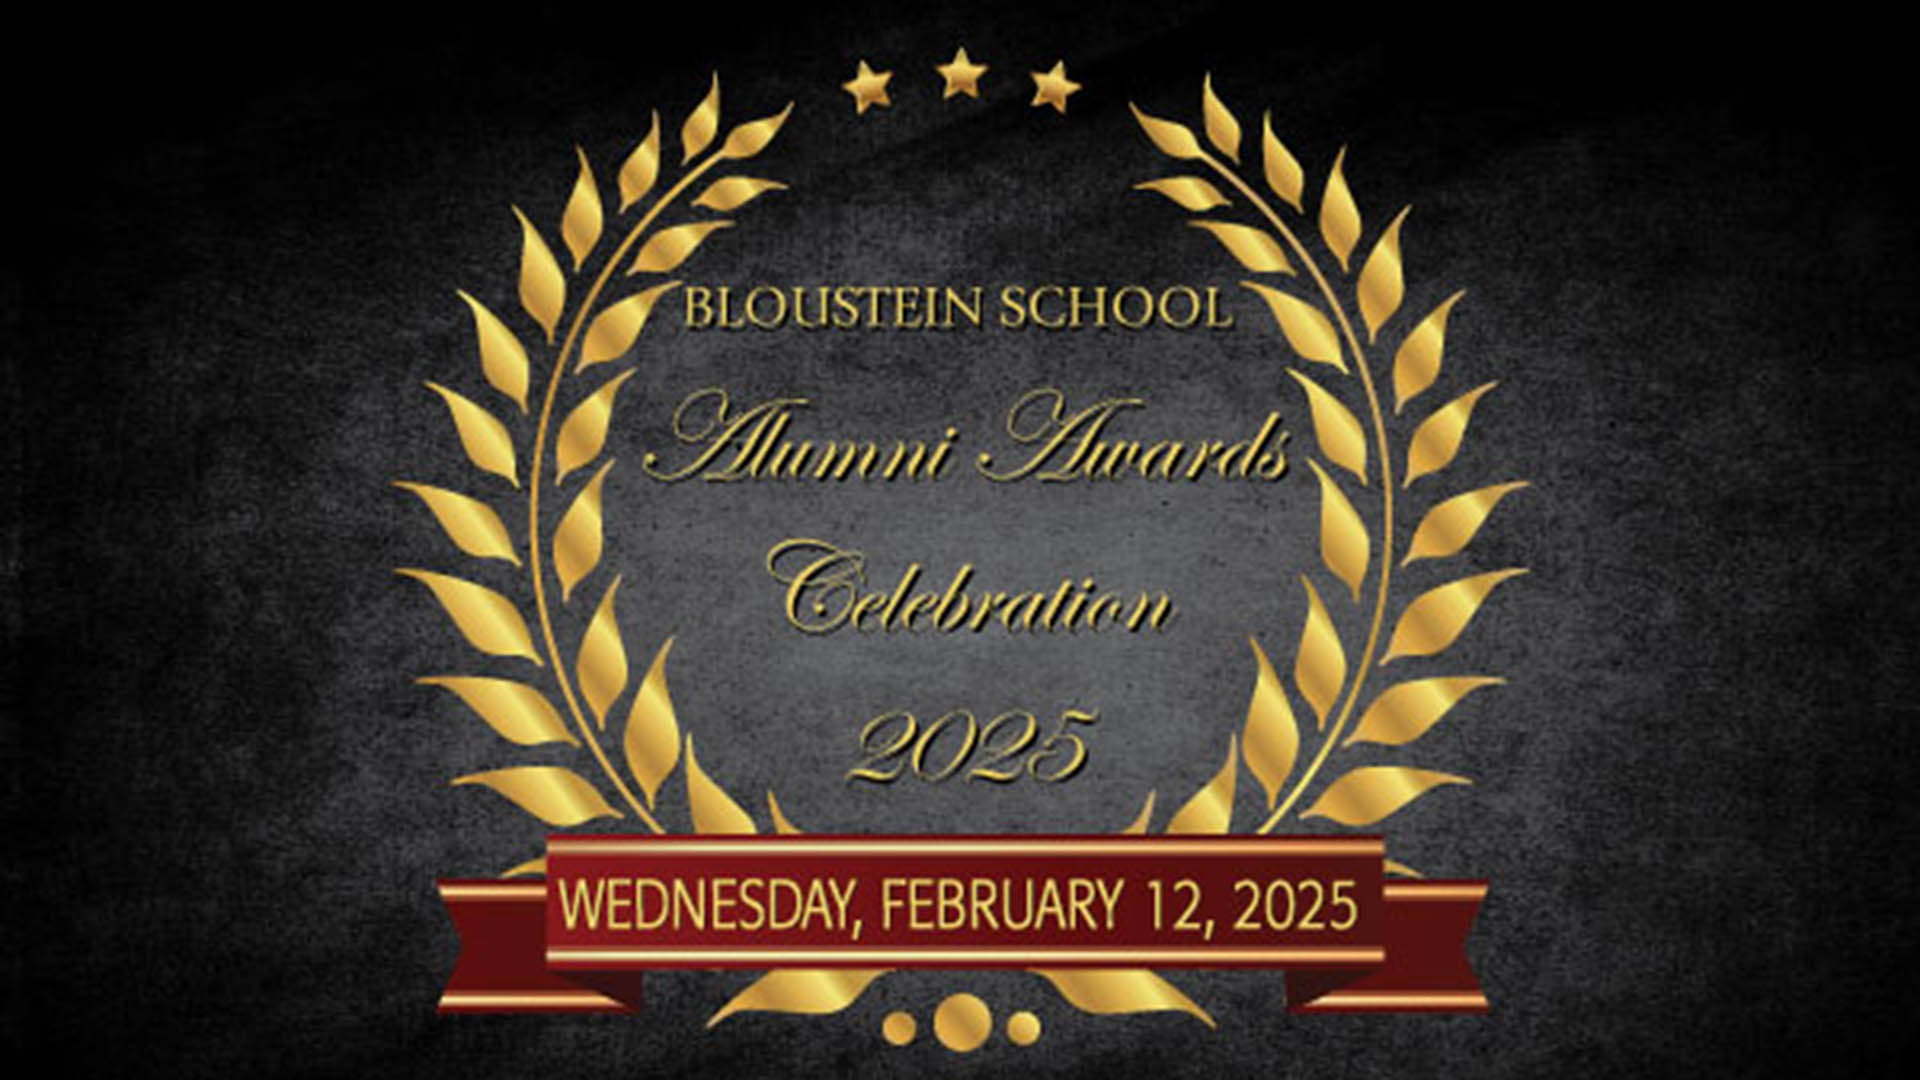 2025 Bloustein School Alumni Awards Celebration banner